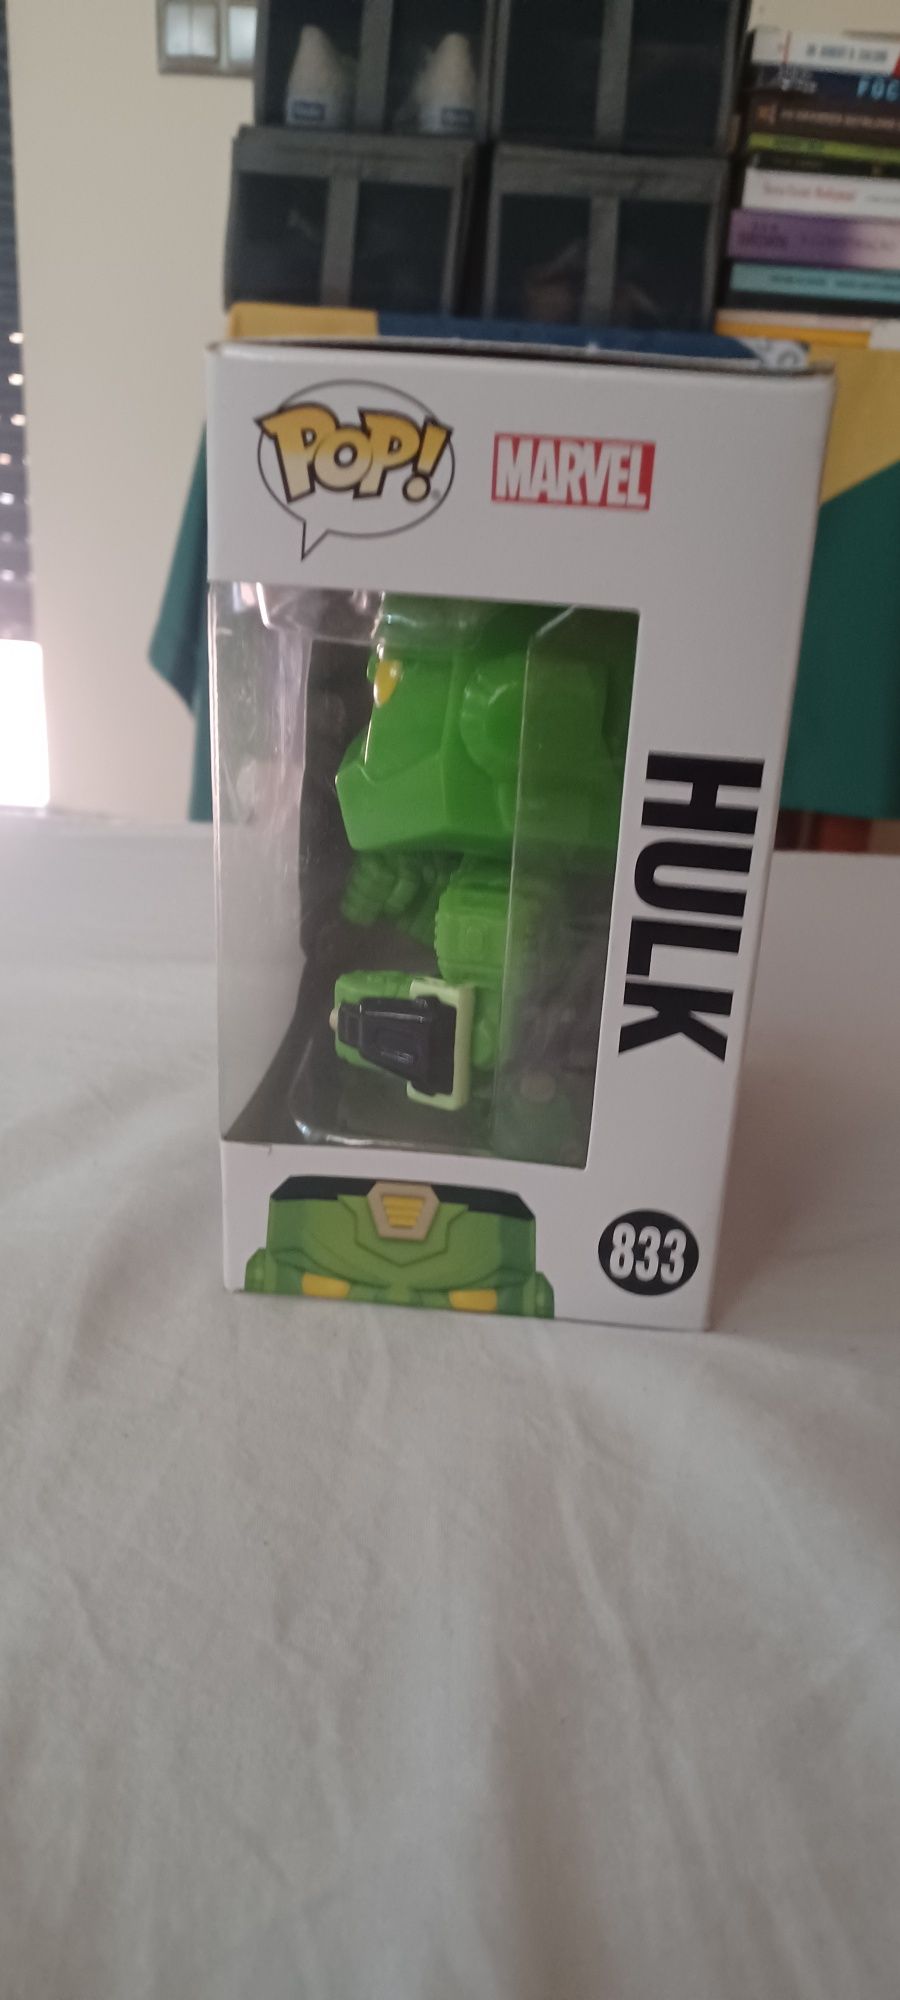 Funko pop Hulk bobble-head